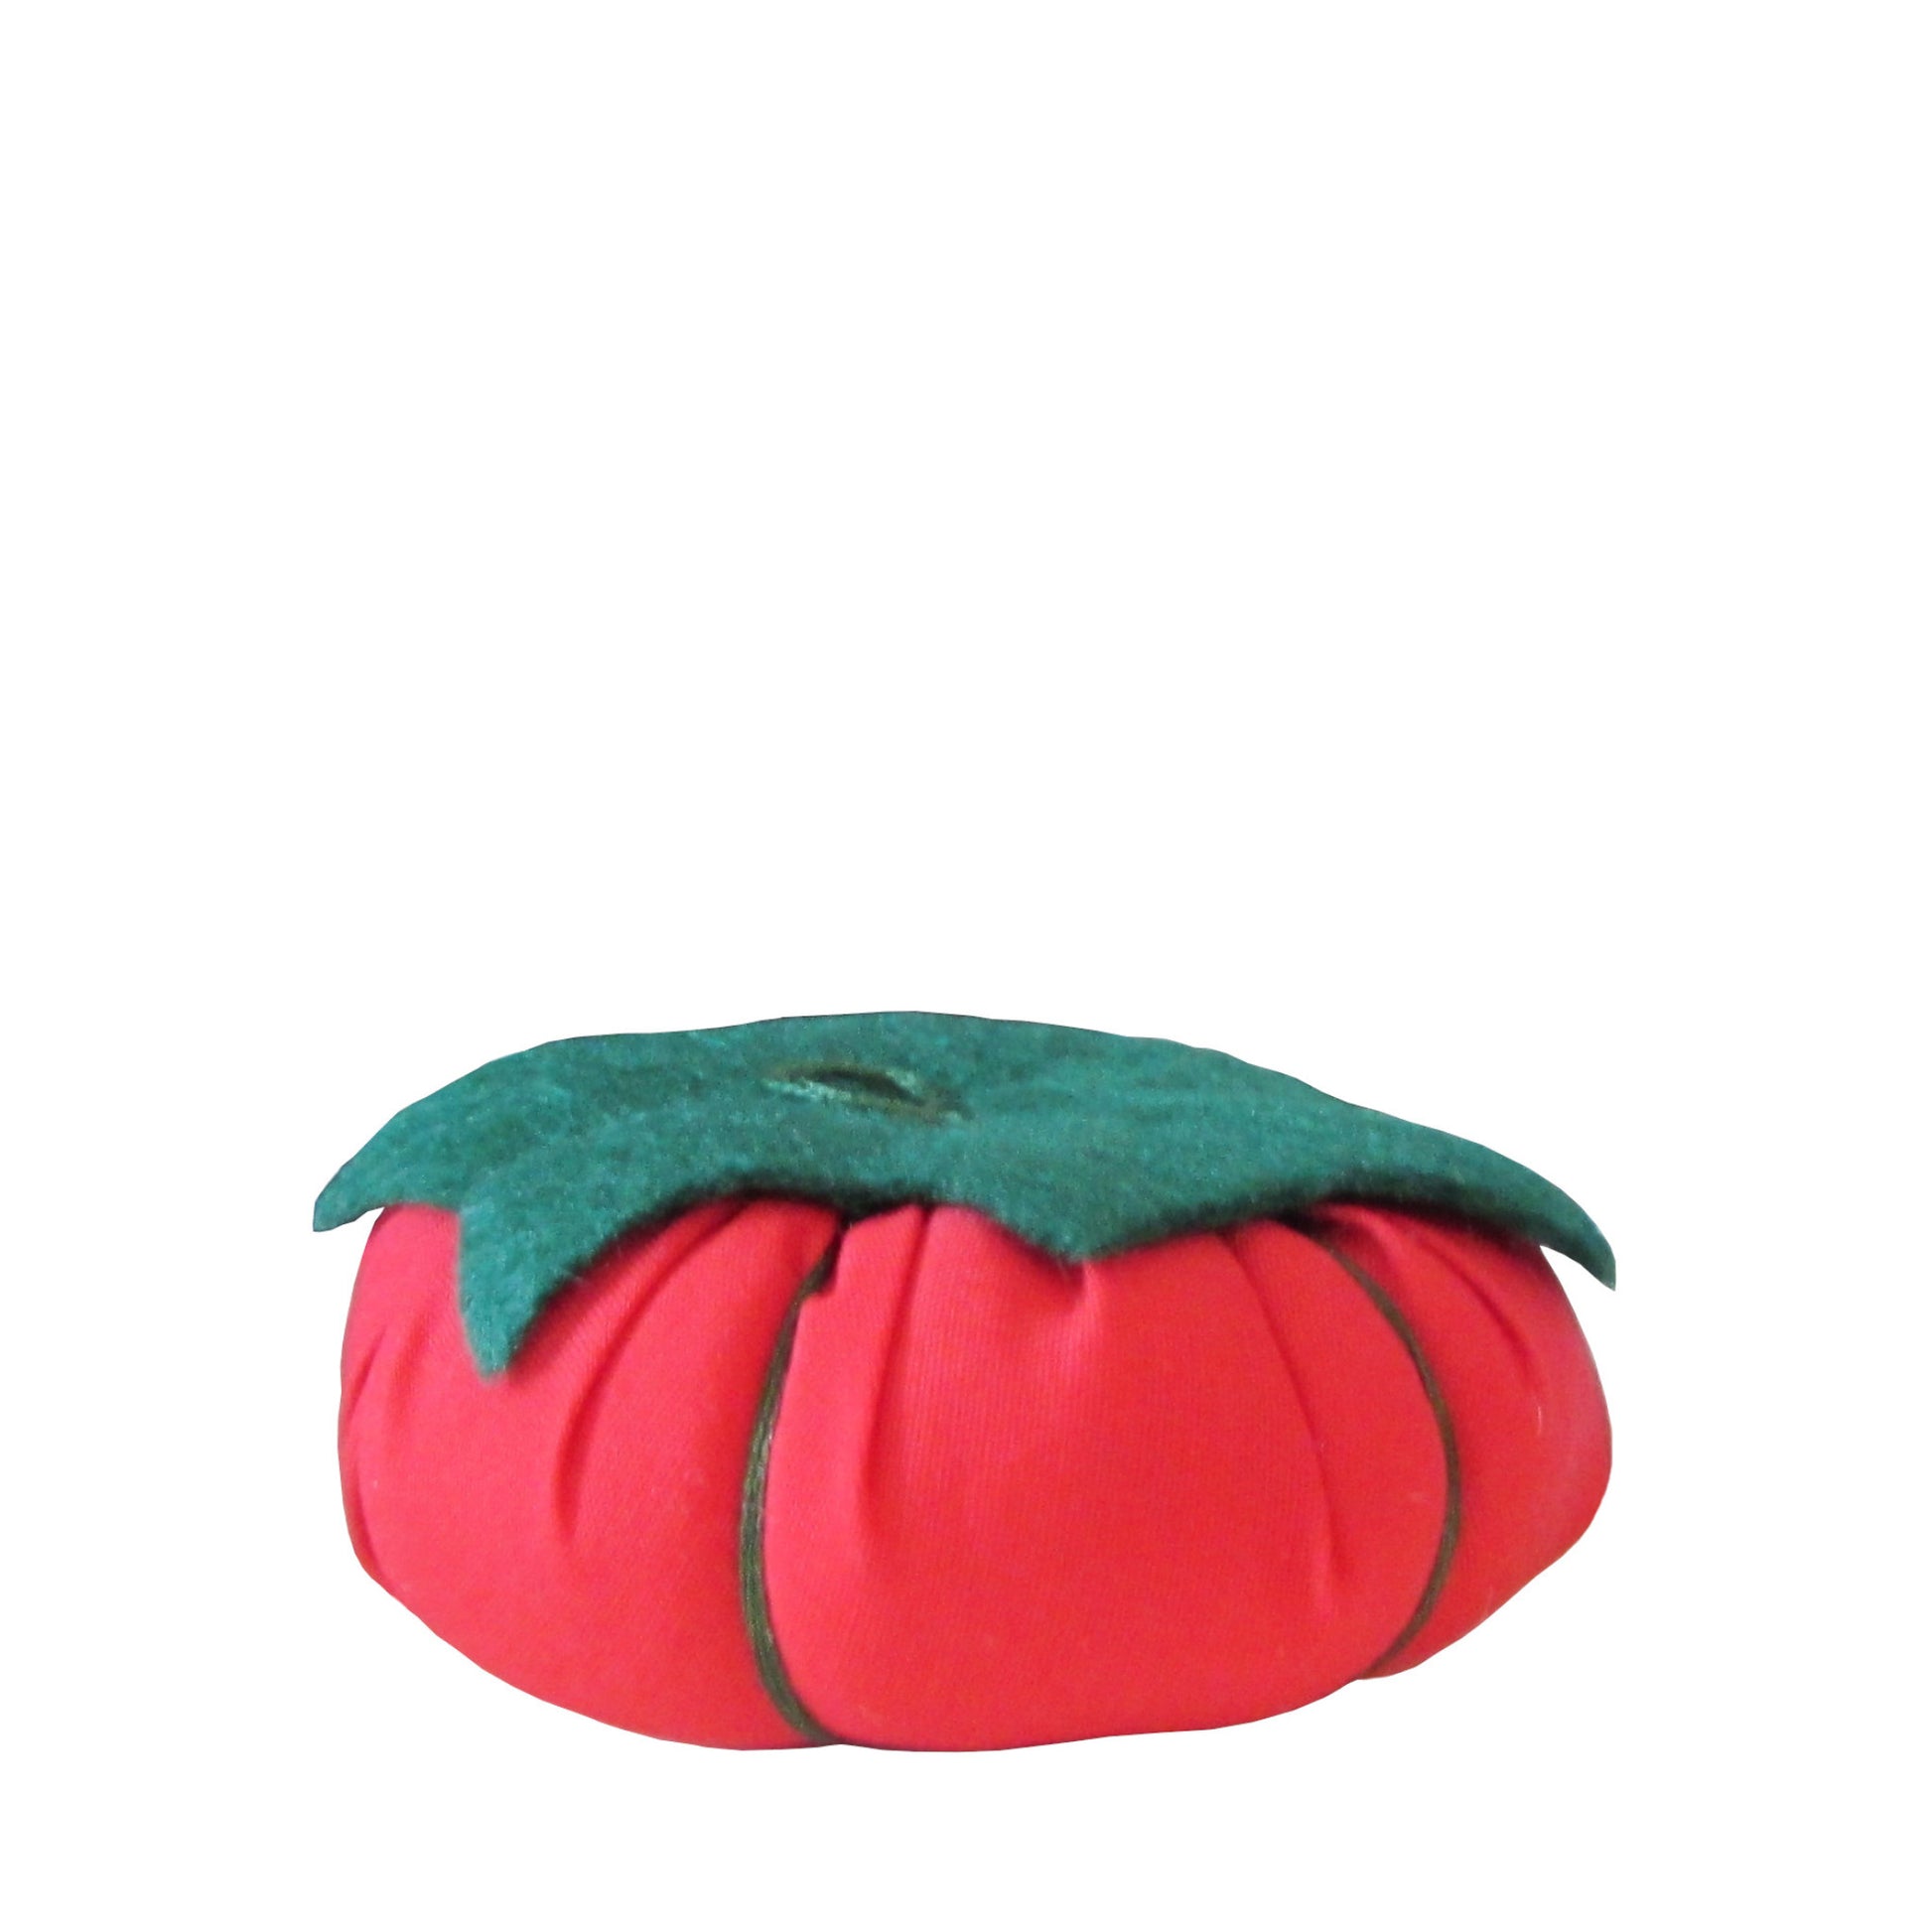 Green Top Red Tomato Pincushion